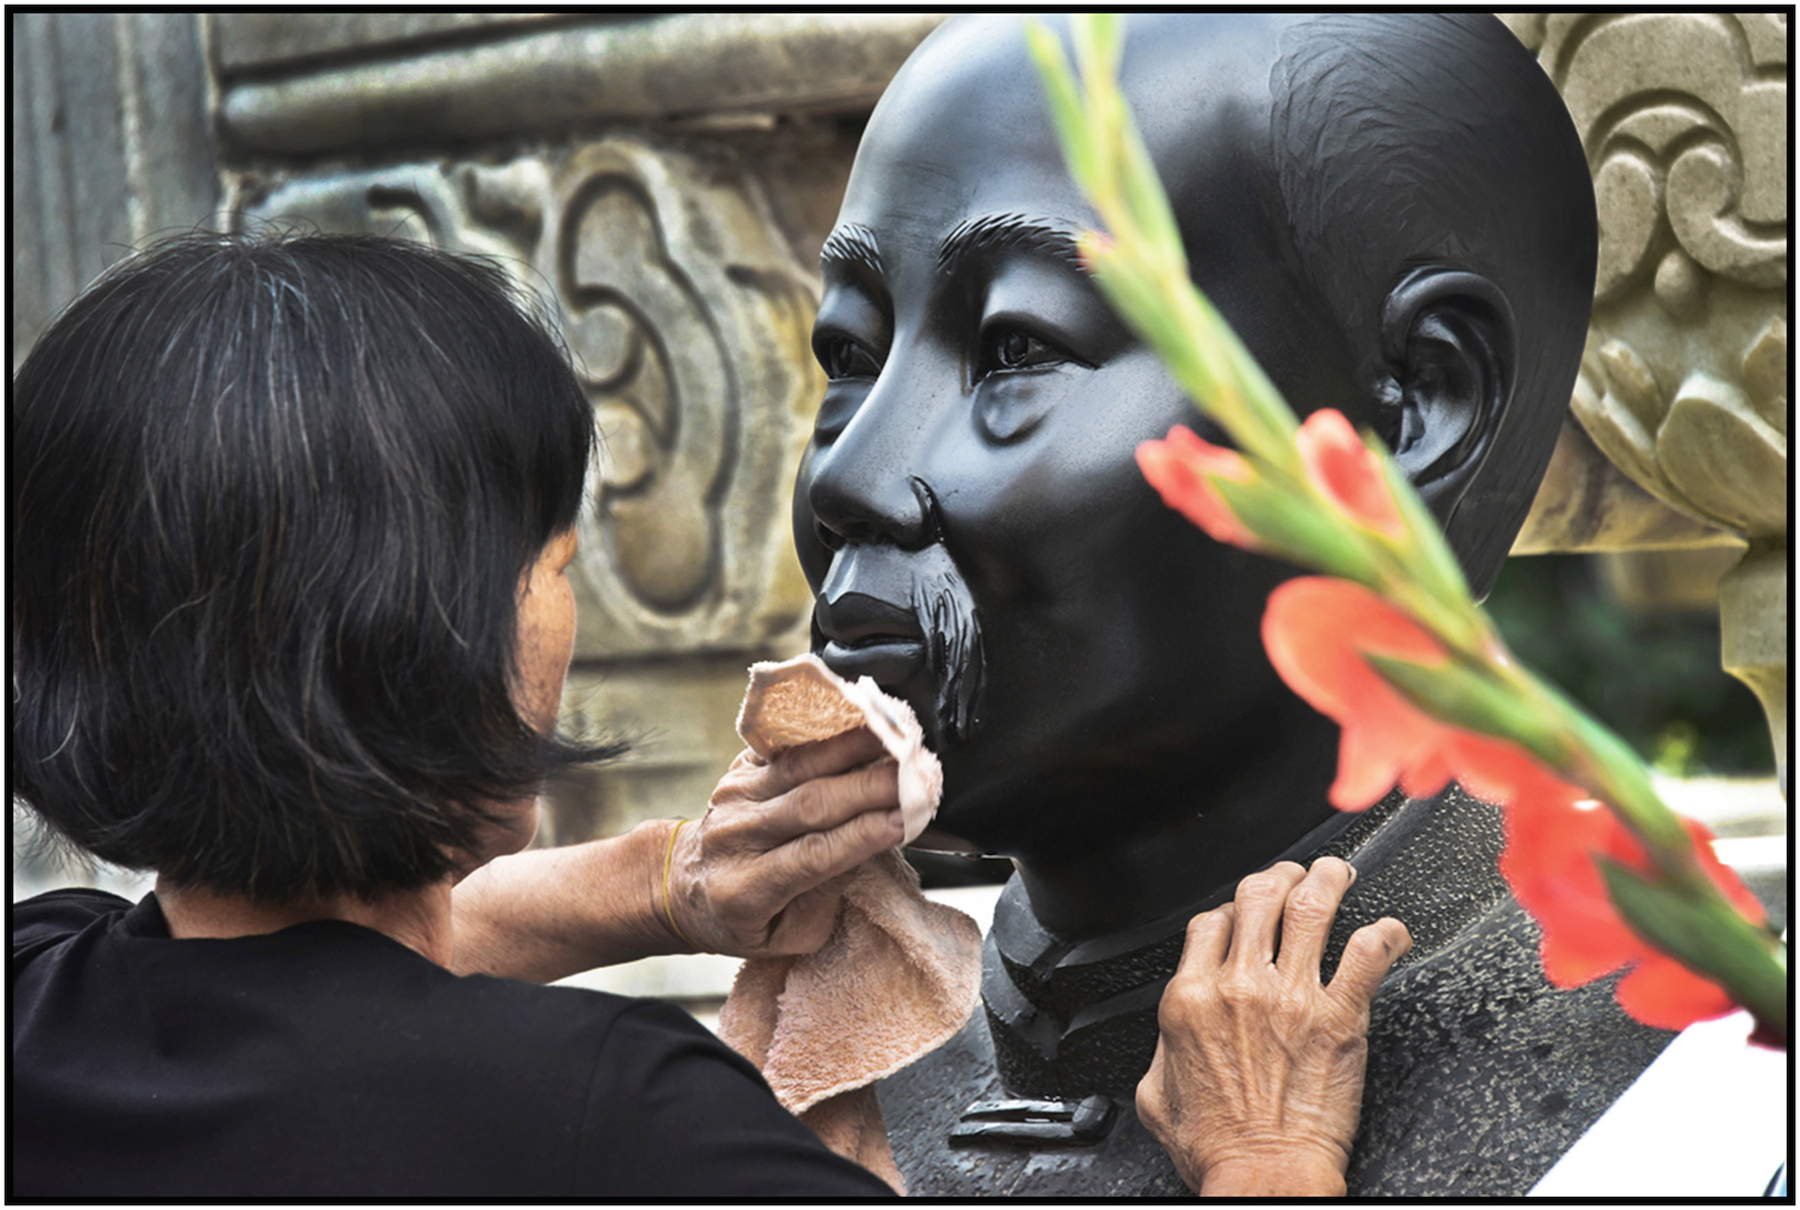  Ho Chi Minh sculpture in central courtyard of Binh Tay Market, Cholon, Saigon /HCMC, Dec 2015. 